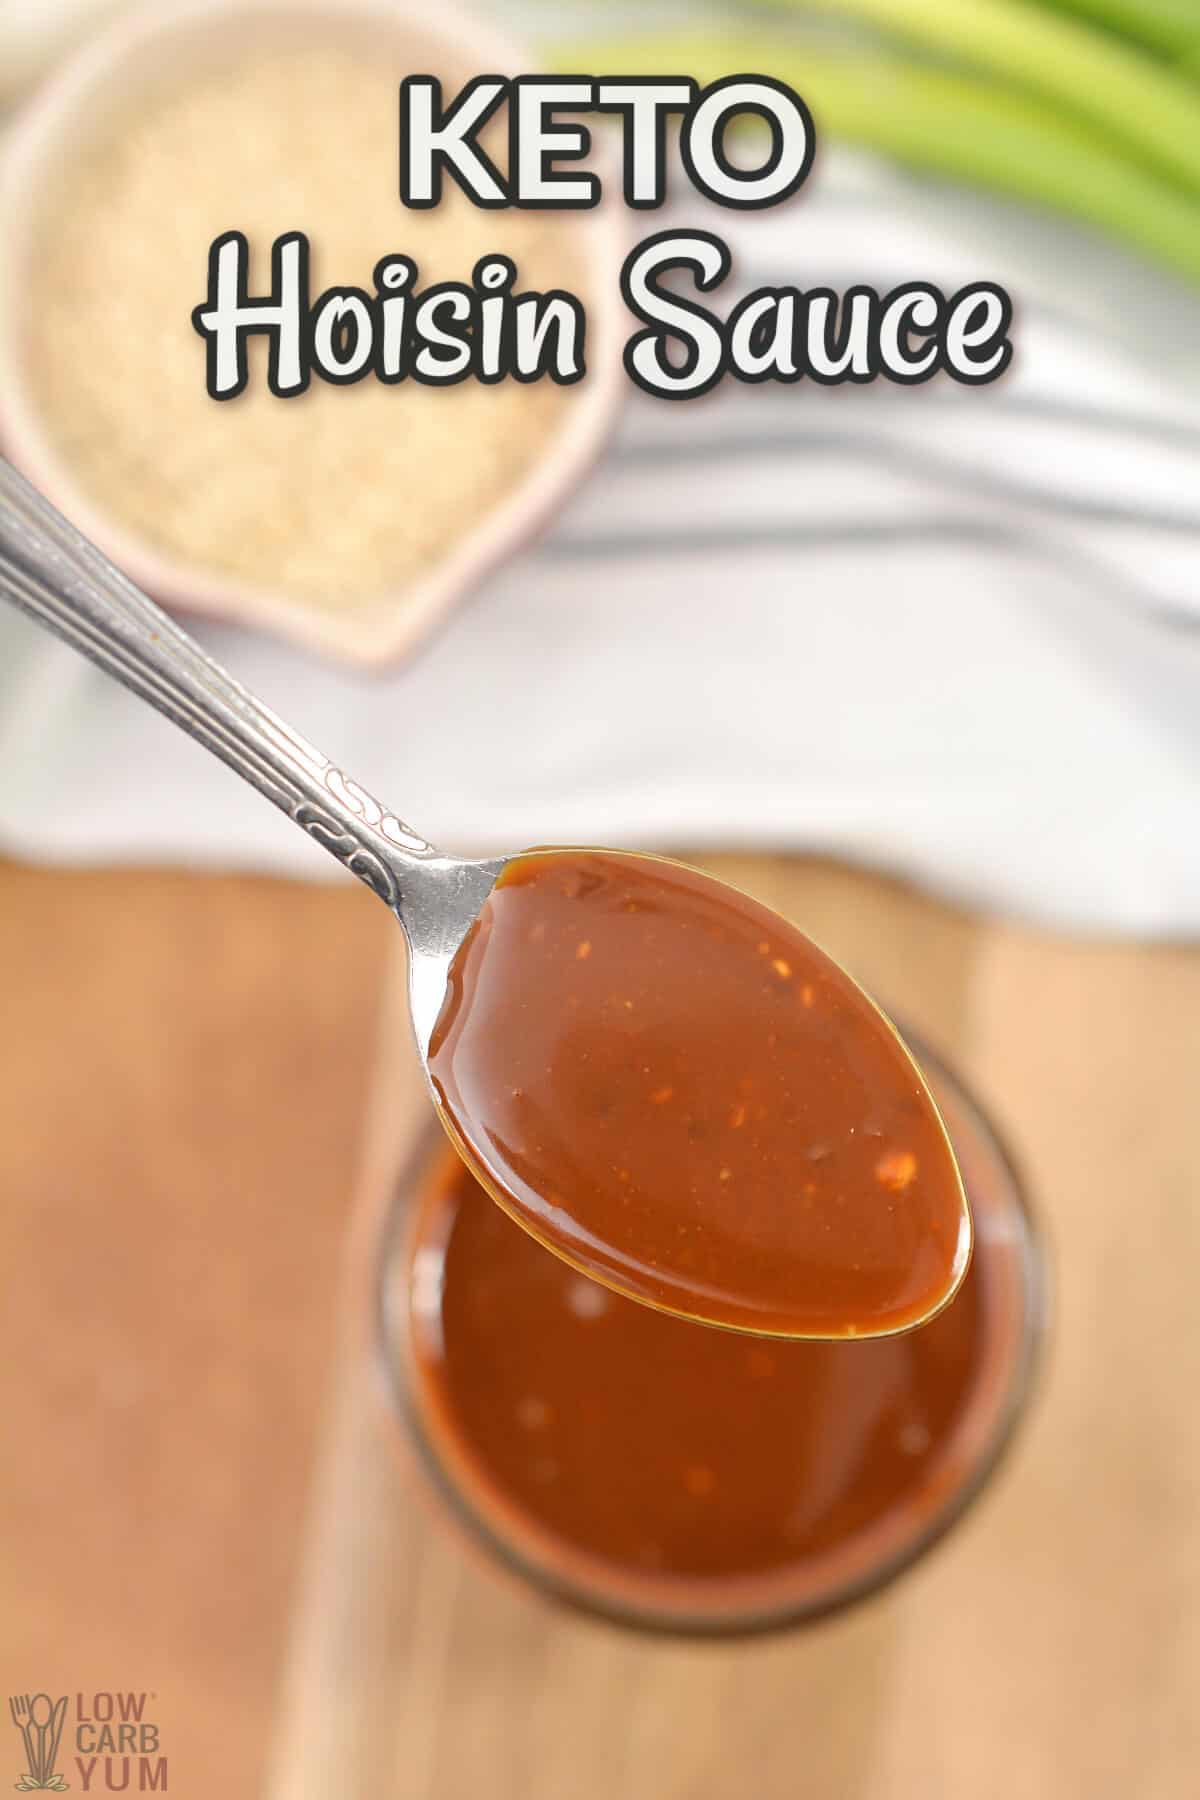 Keto Hoisin Sauce Recipe - Low Carb Yum